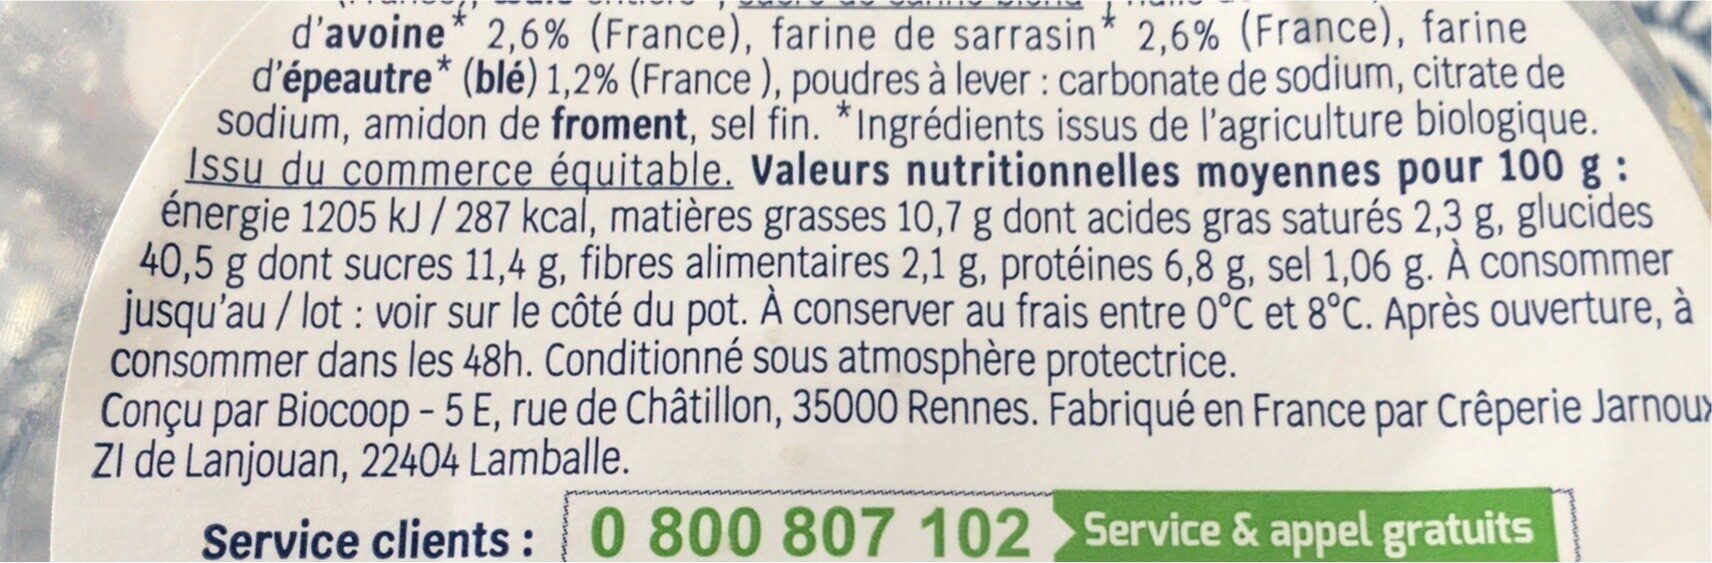 Pancakes moelleux - Nutrition facts - fr